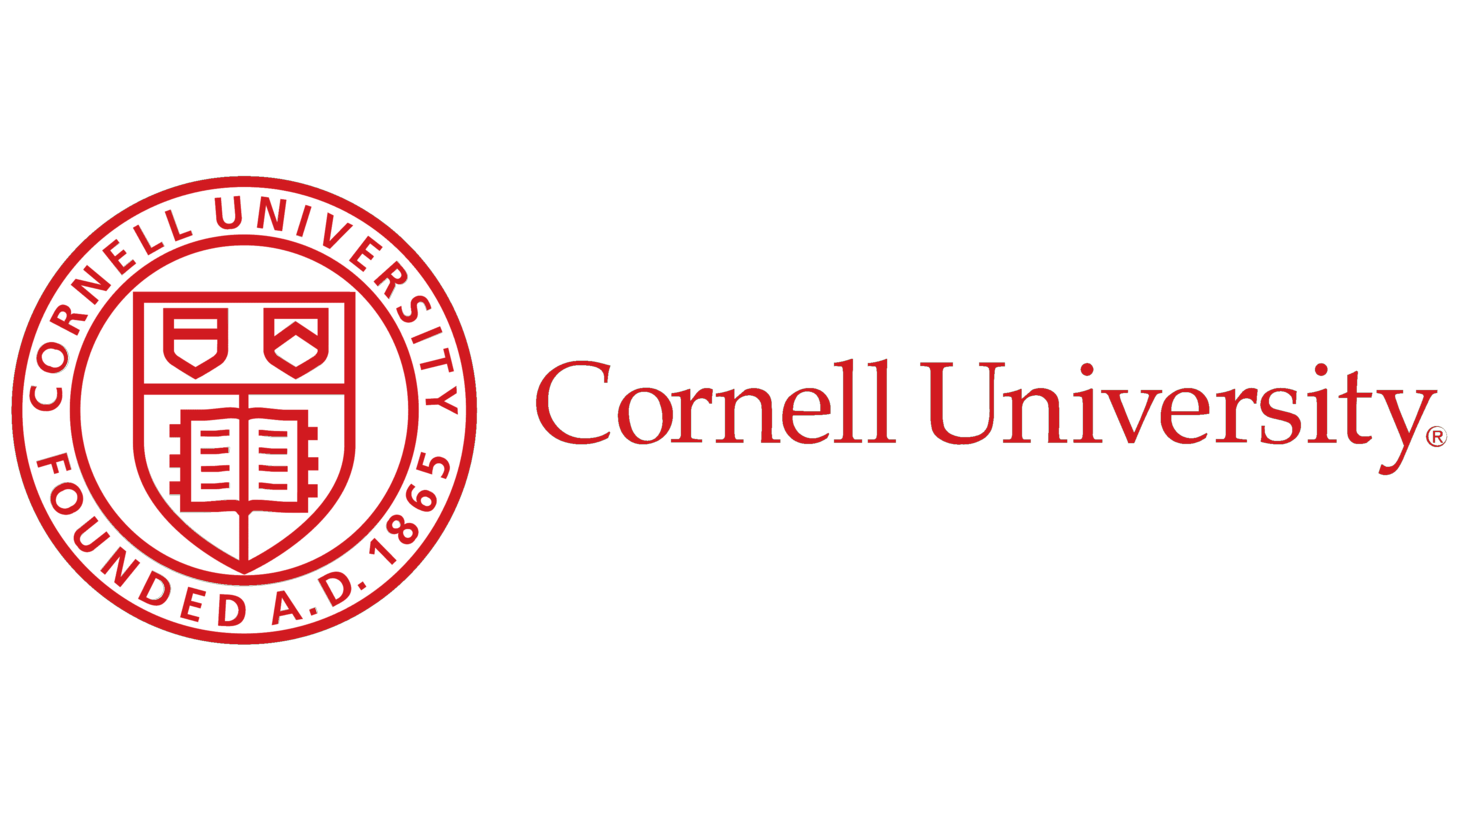 Cornell university sign